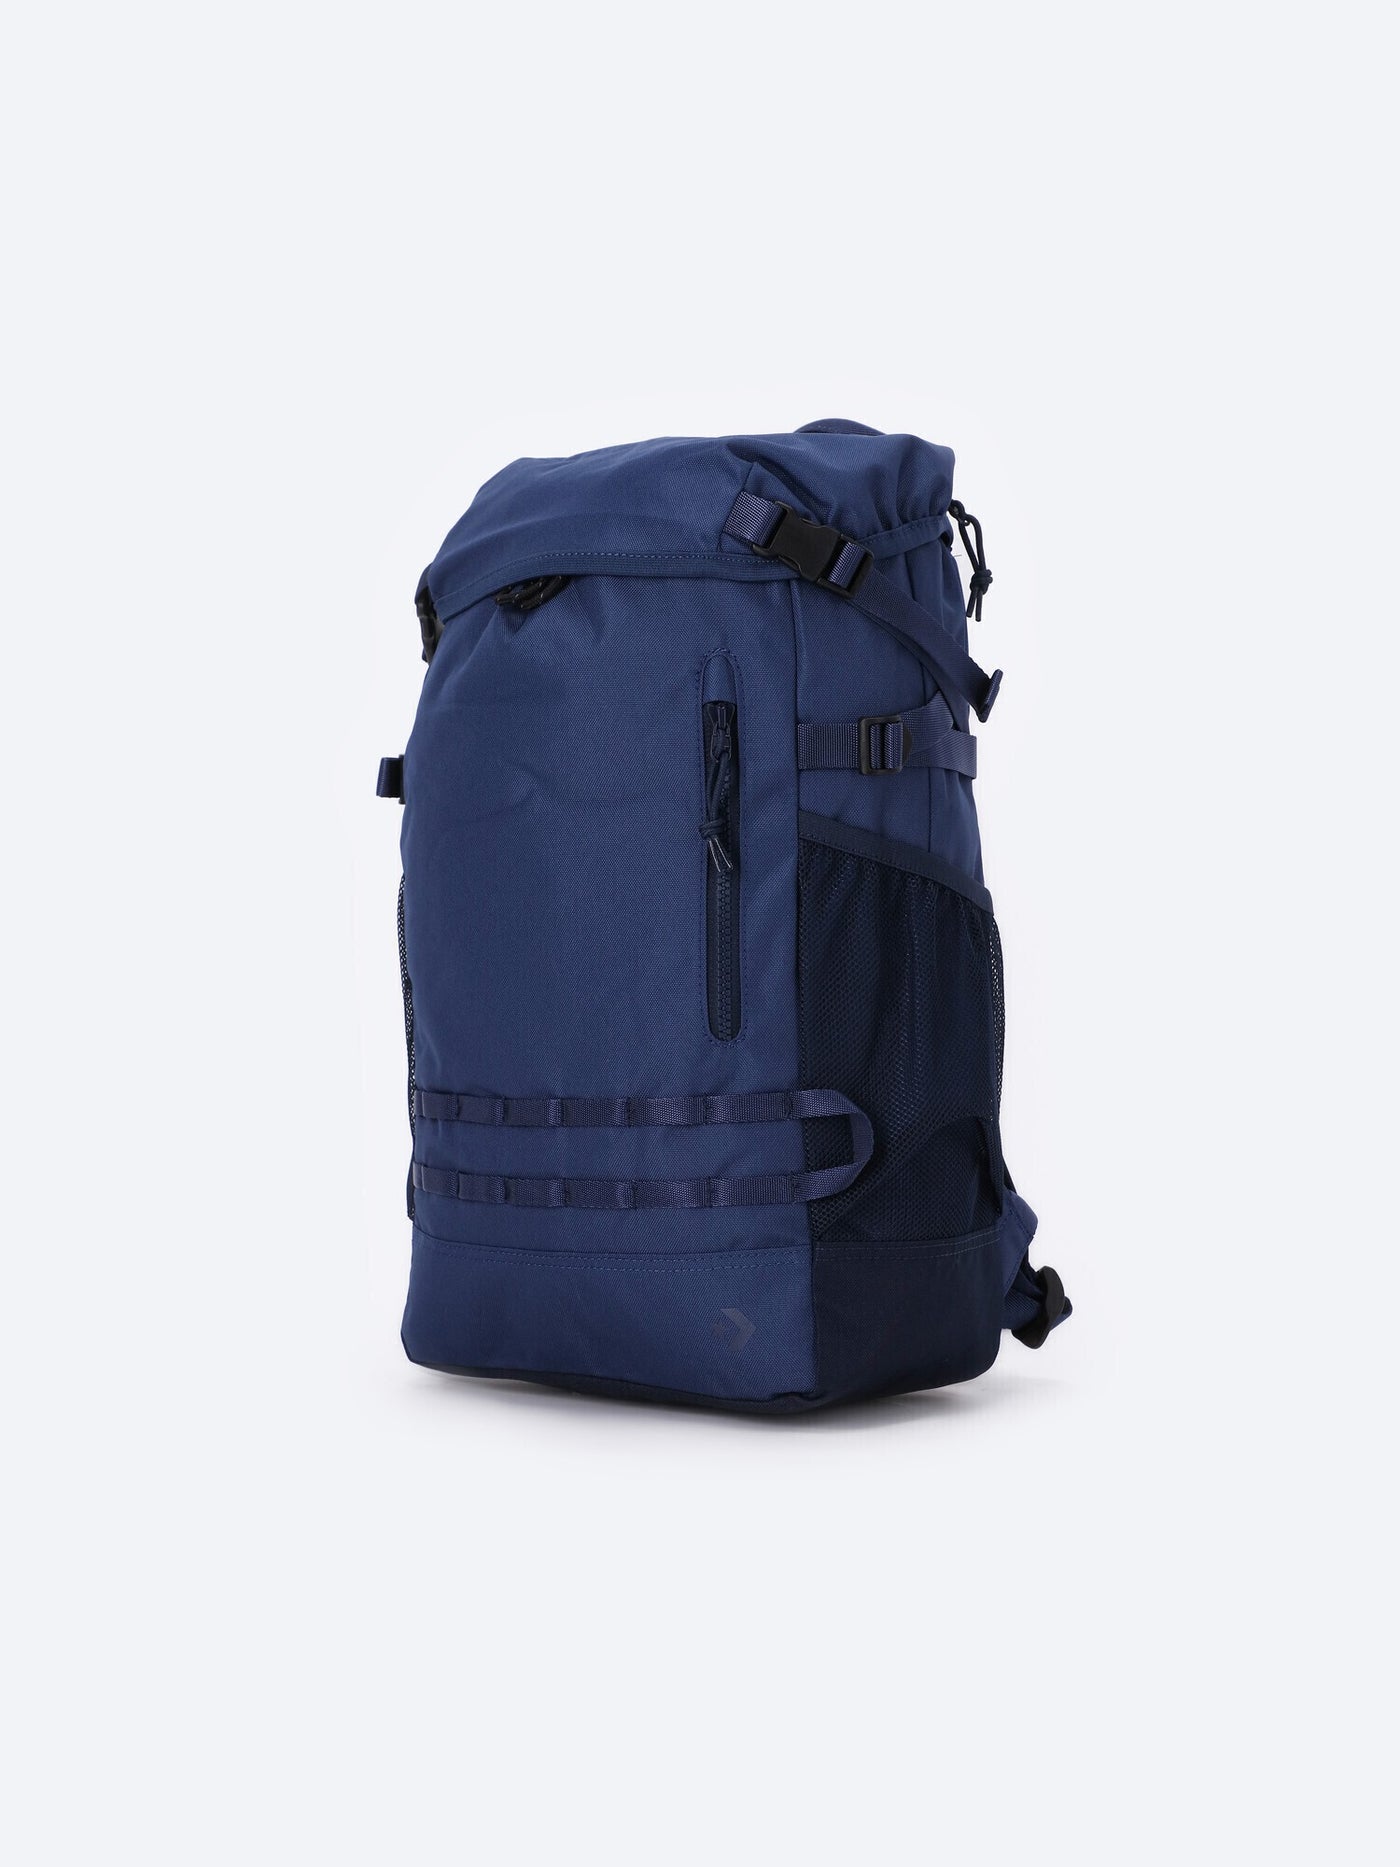 Converse Unisex Toploader Backpack - 10008276-a02